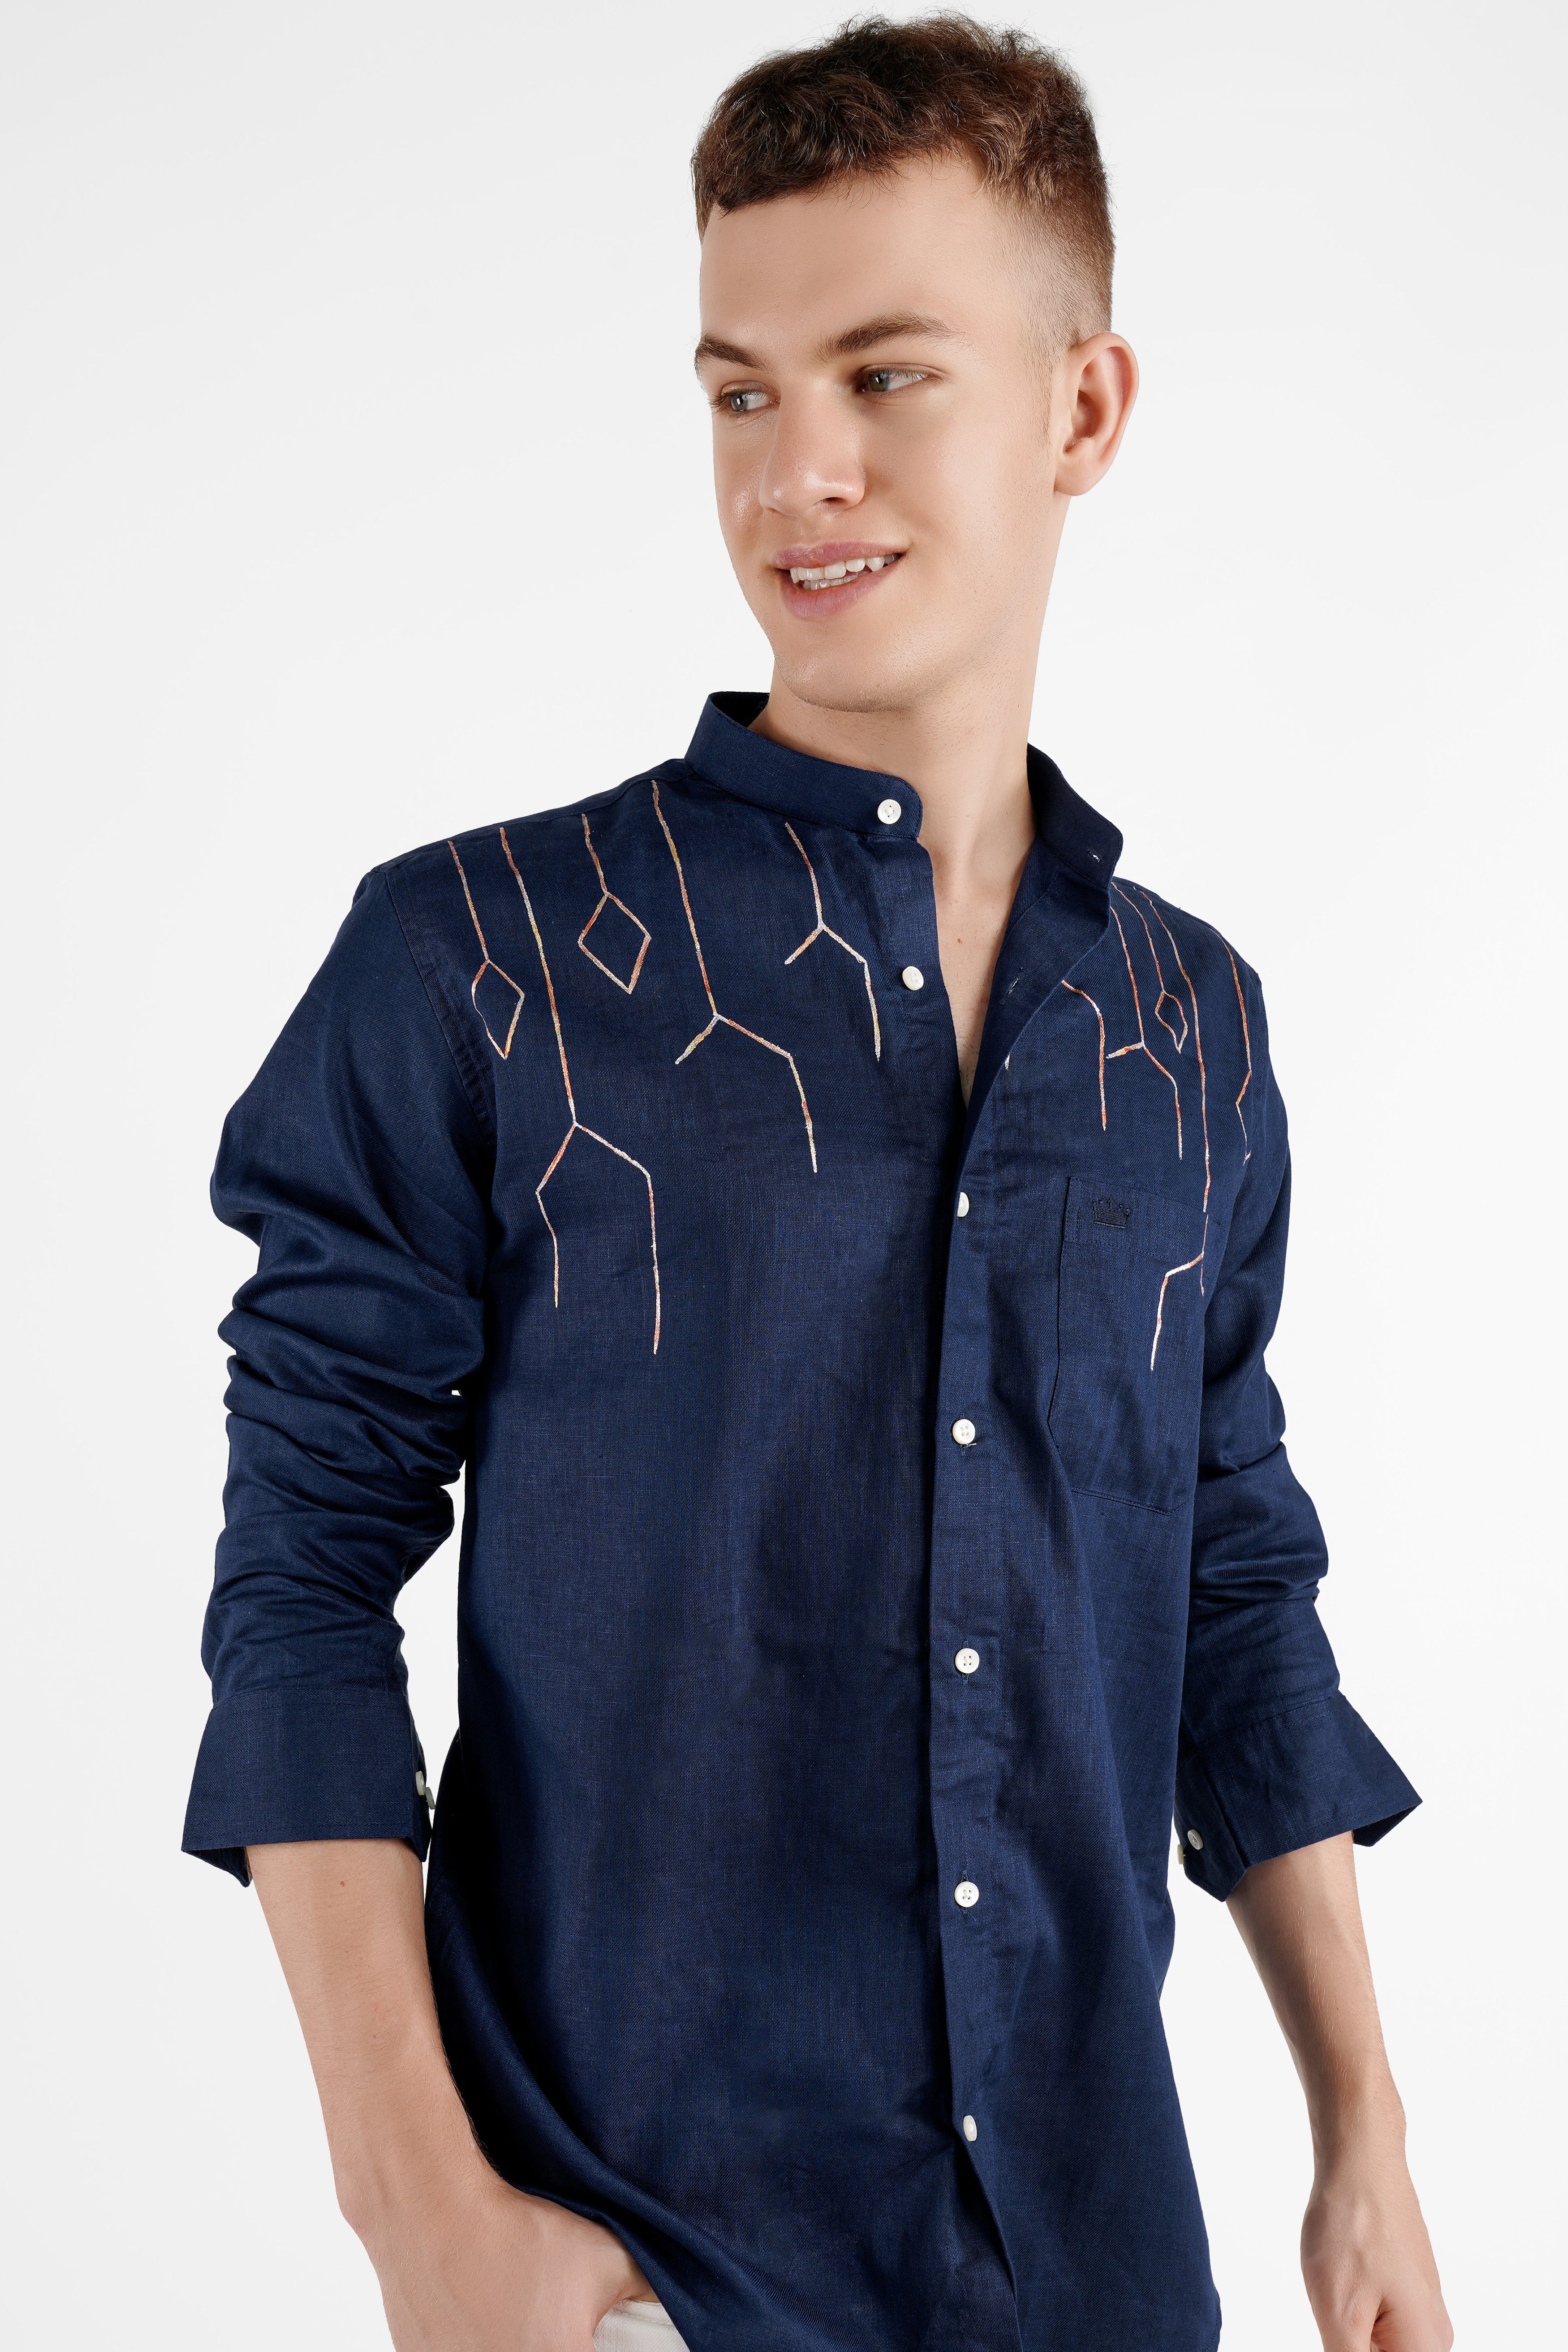 Bunting Blue Hand Painted Luxurious Linen Designer Shirt